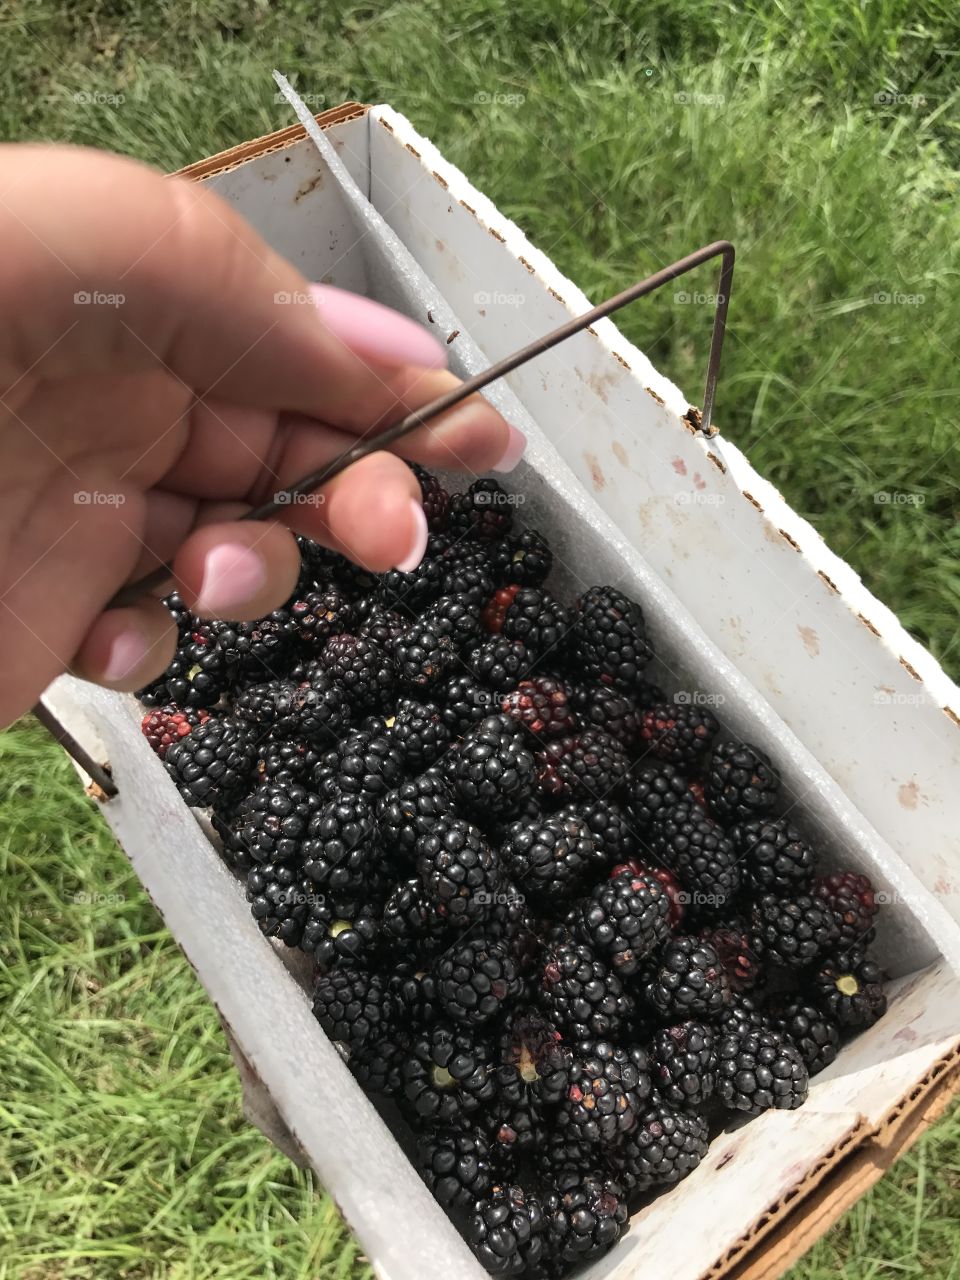 Black berry picking
